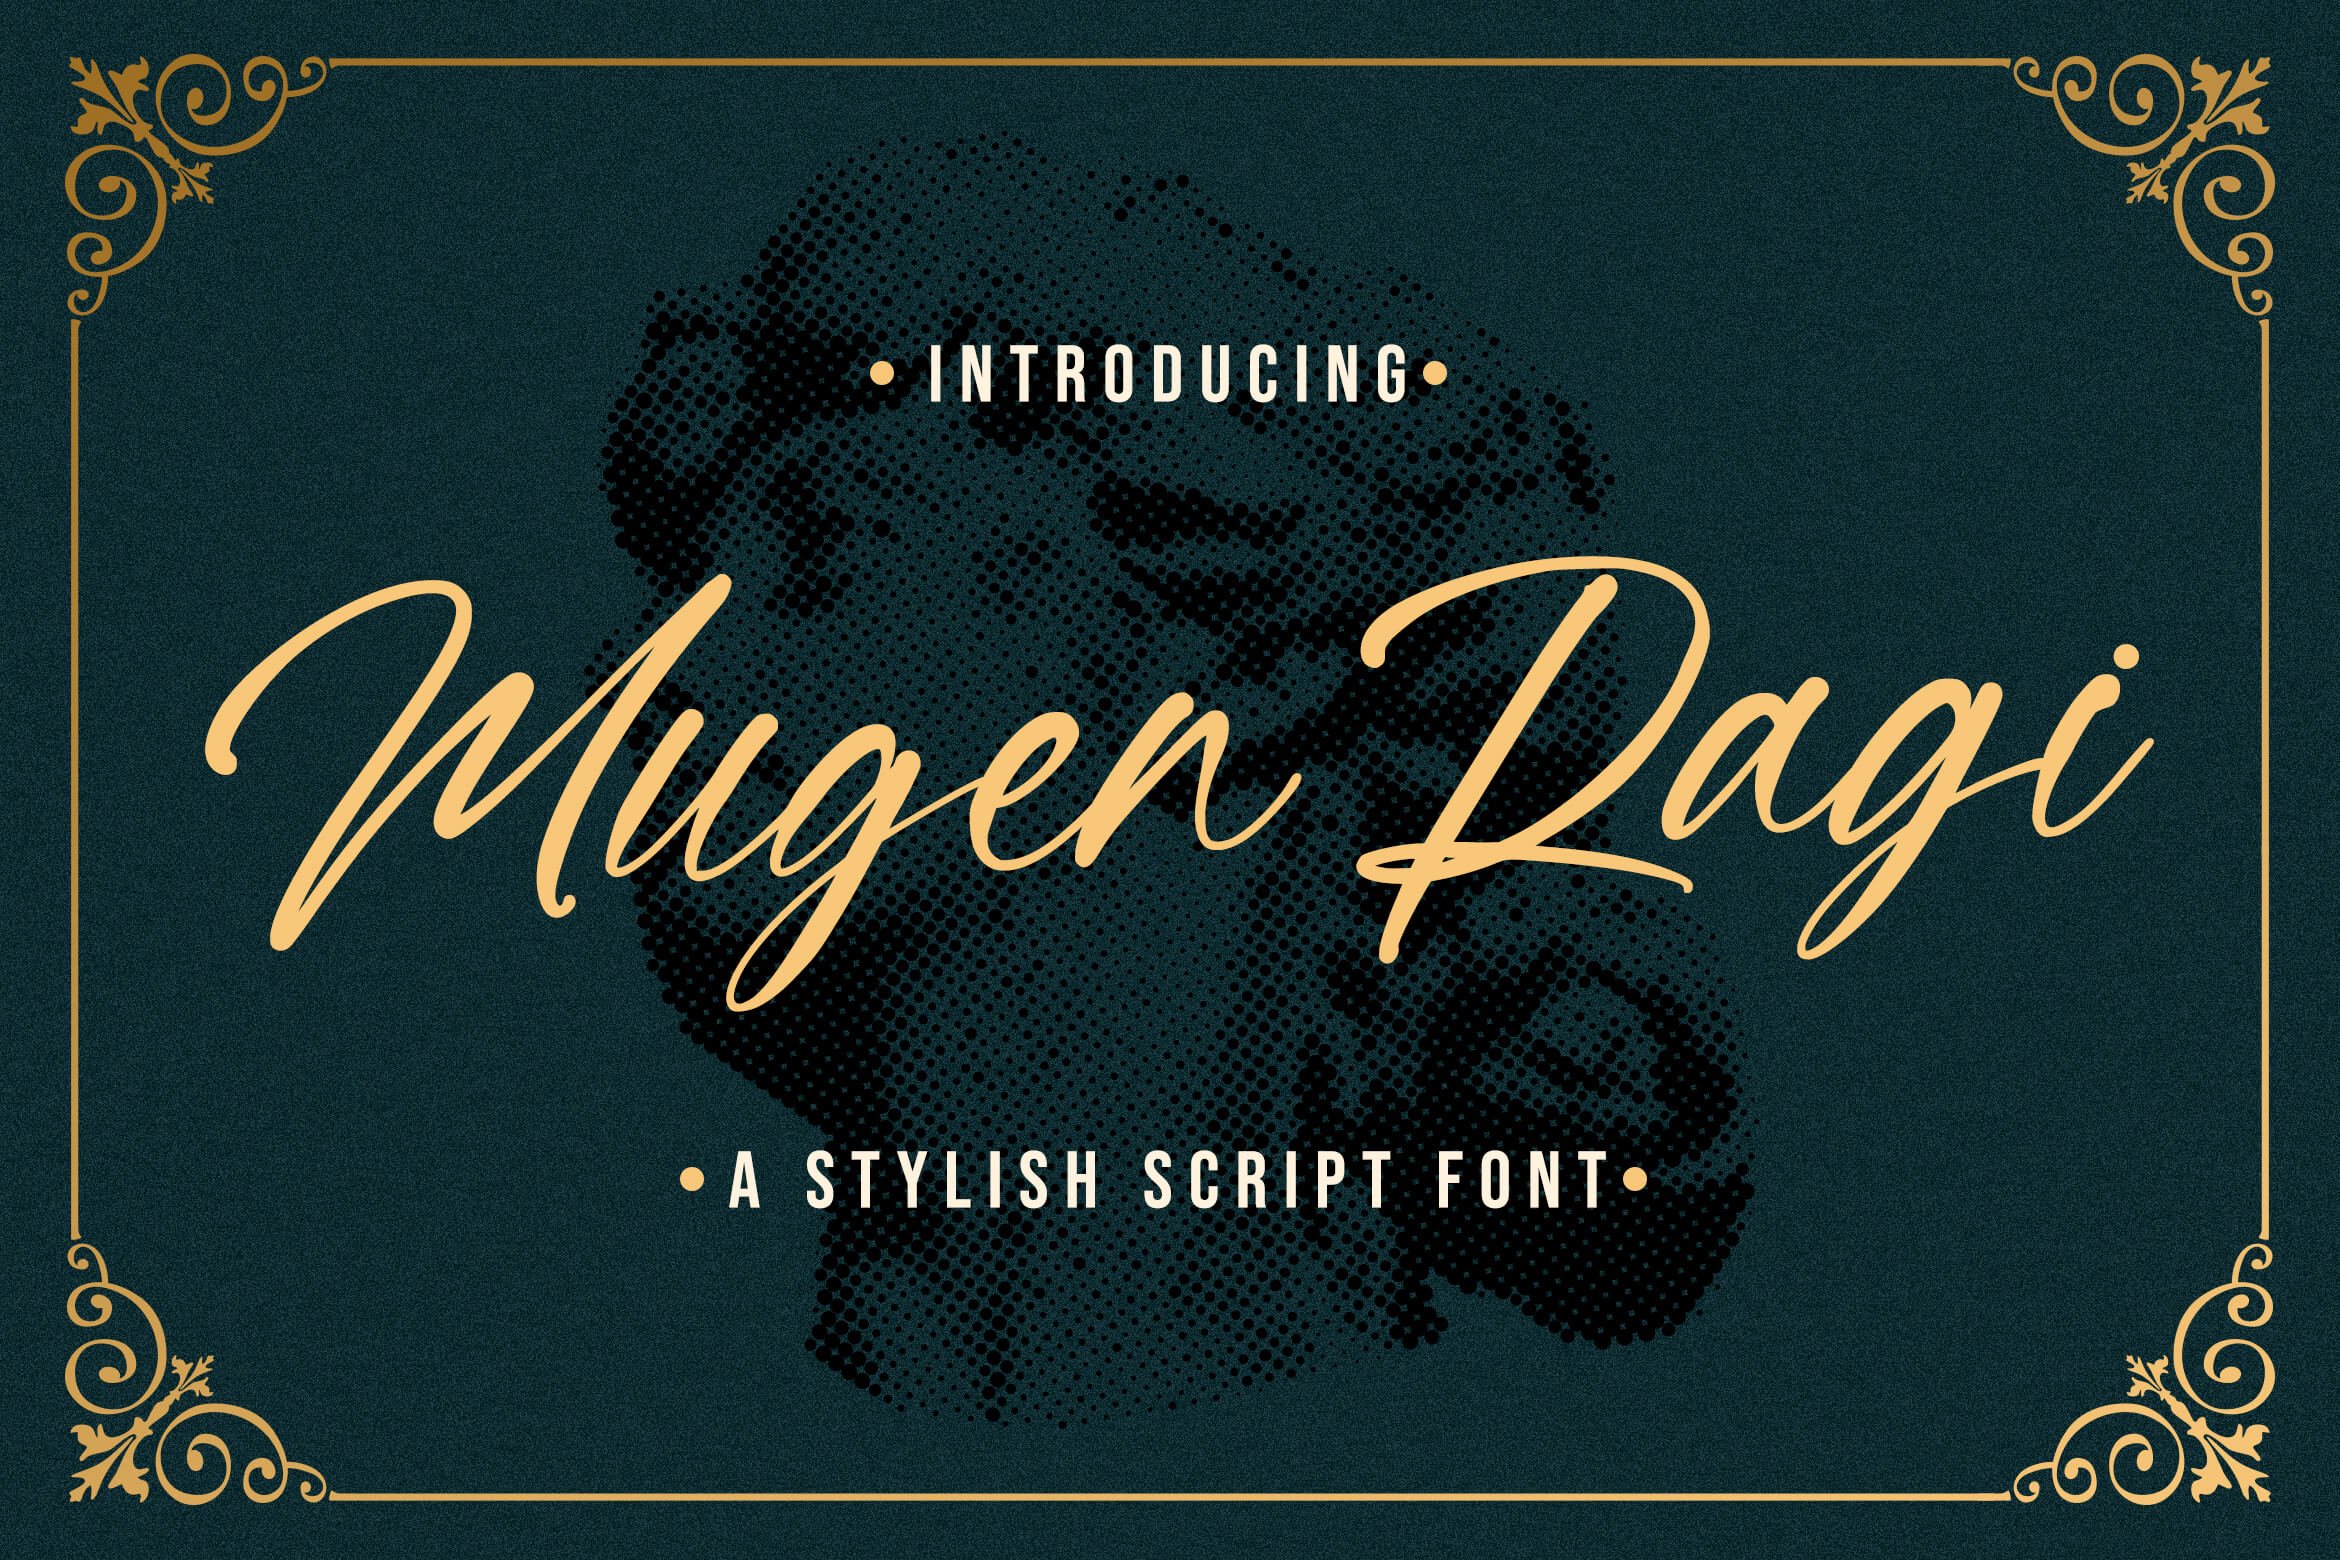 Mugen Ragi - Modern Script Font cover image.